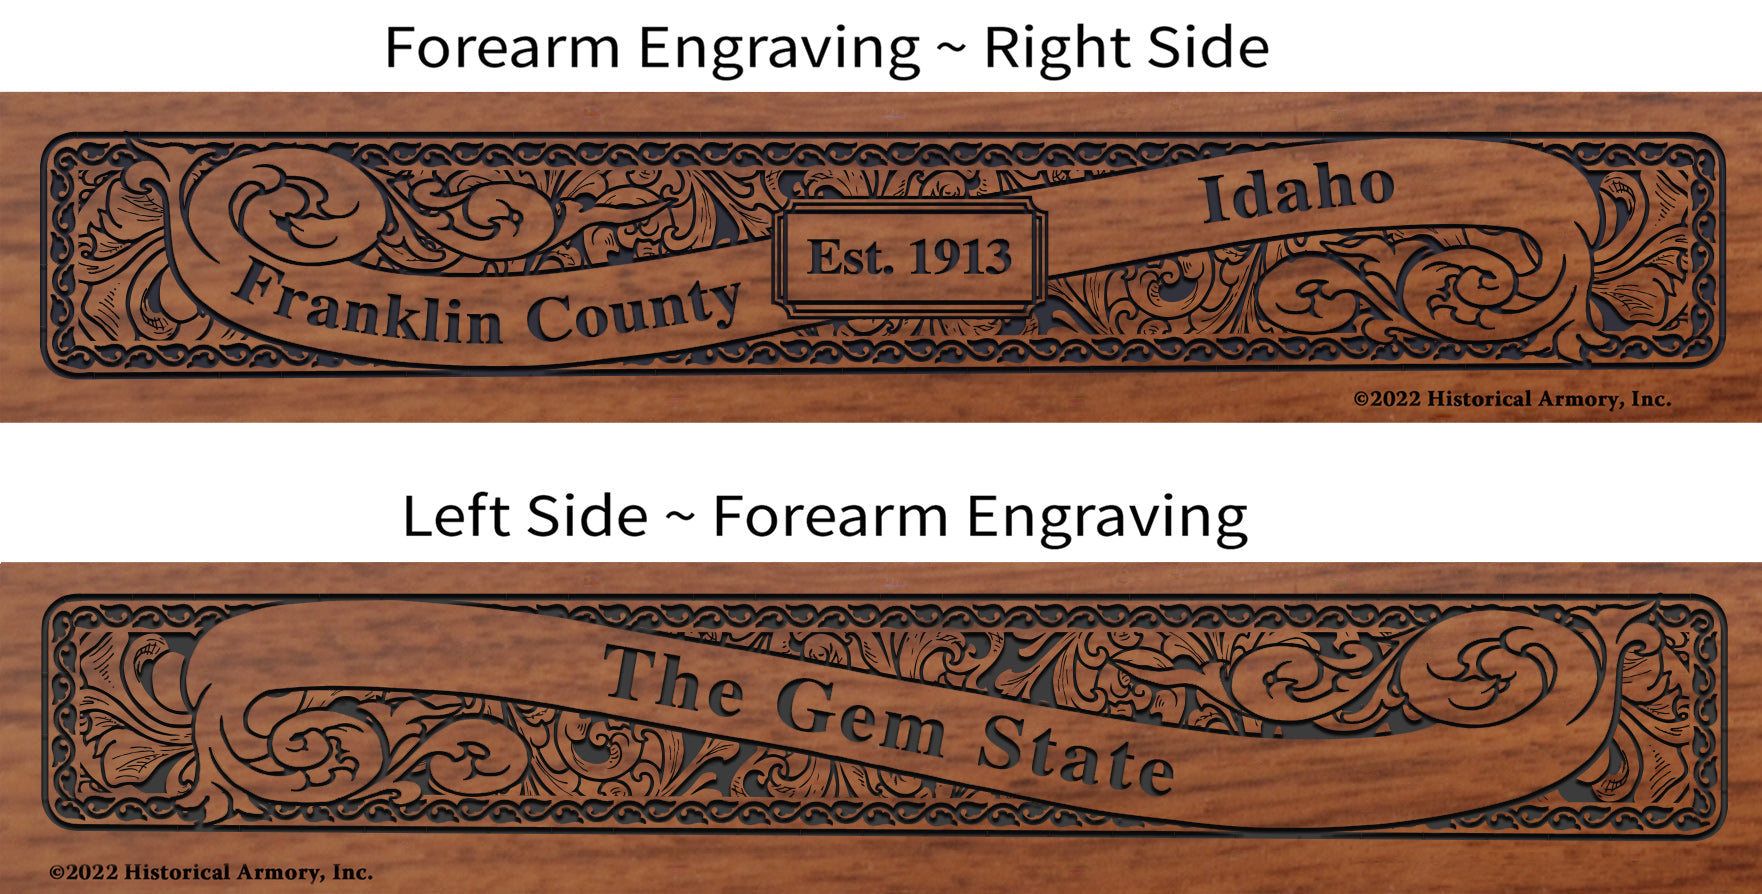 Franklin County Idaho Engraved Rifle Forearm